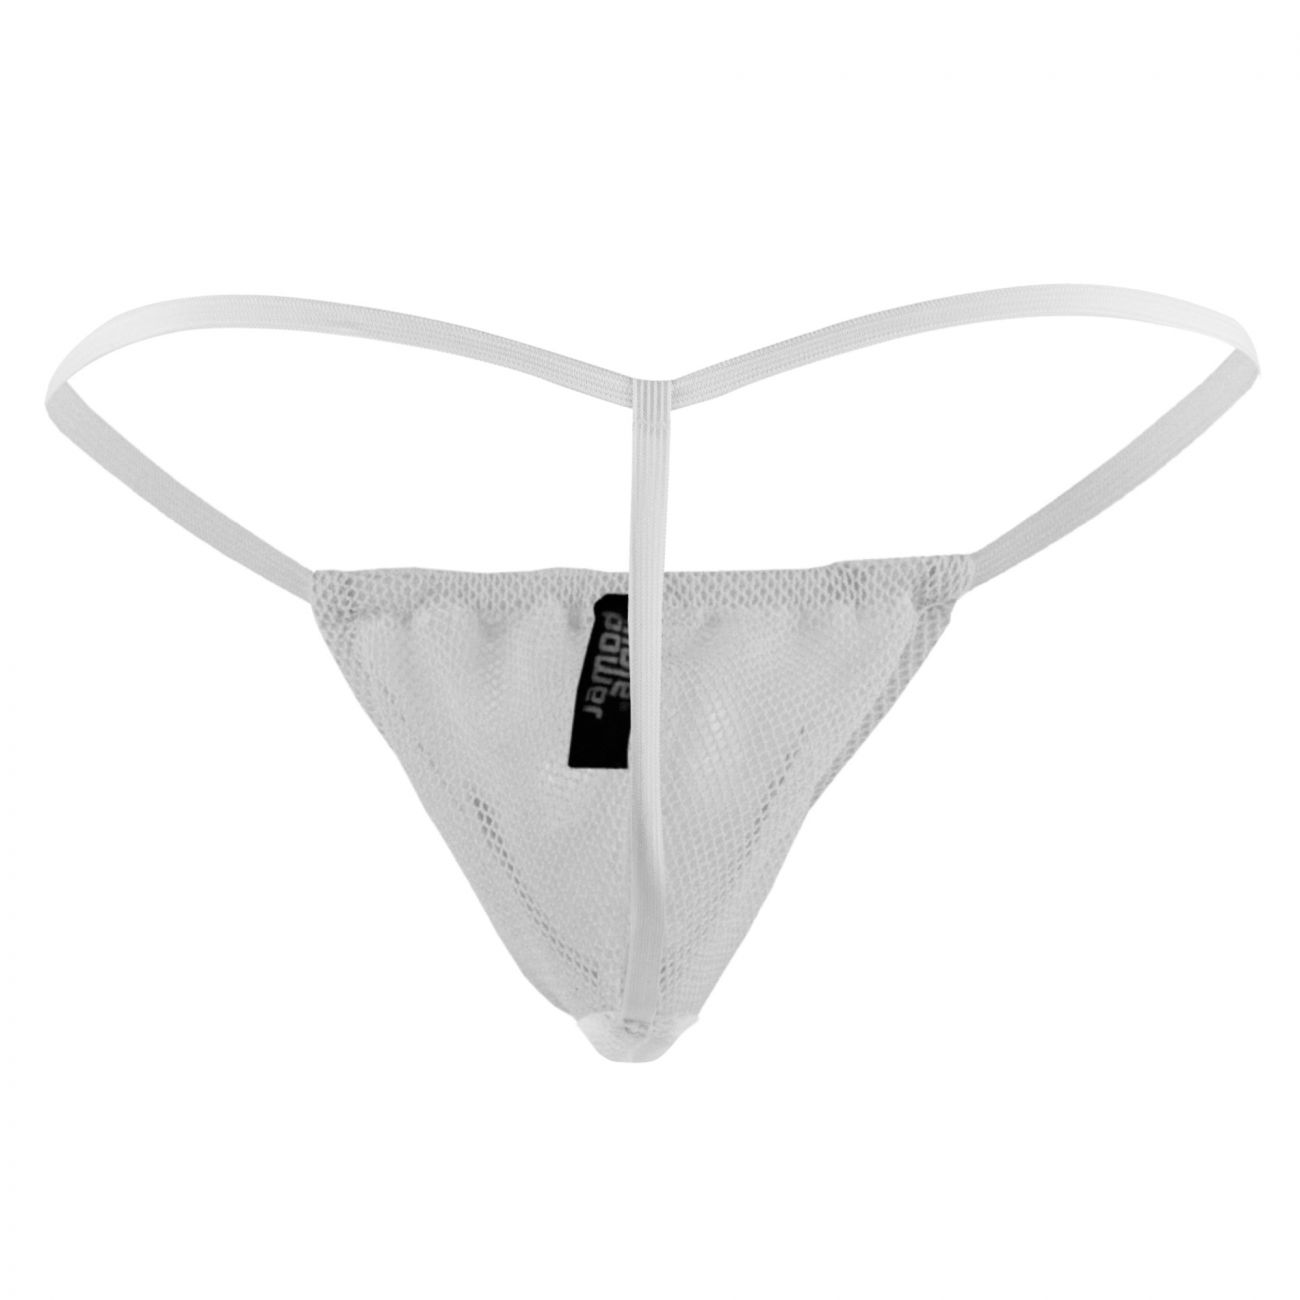 Mens Underwear: Male Power 45011C Stretch Net Posing Strap Thong | eBay